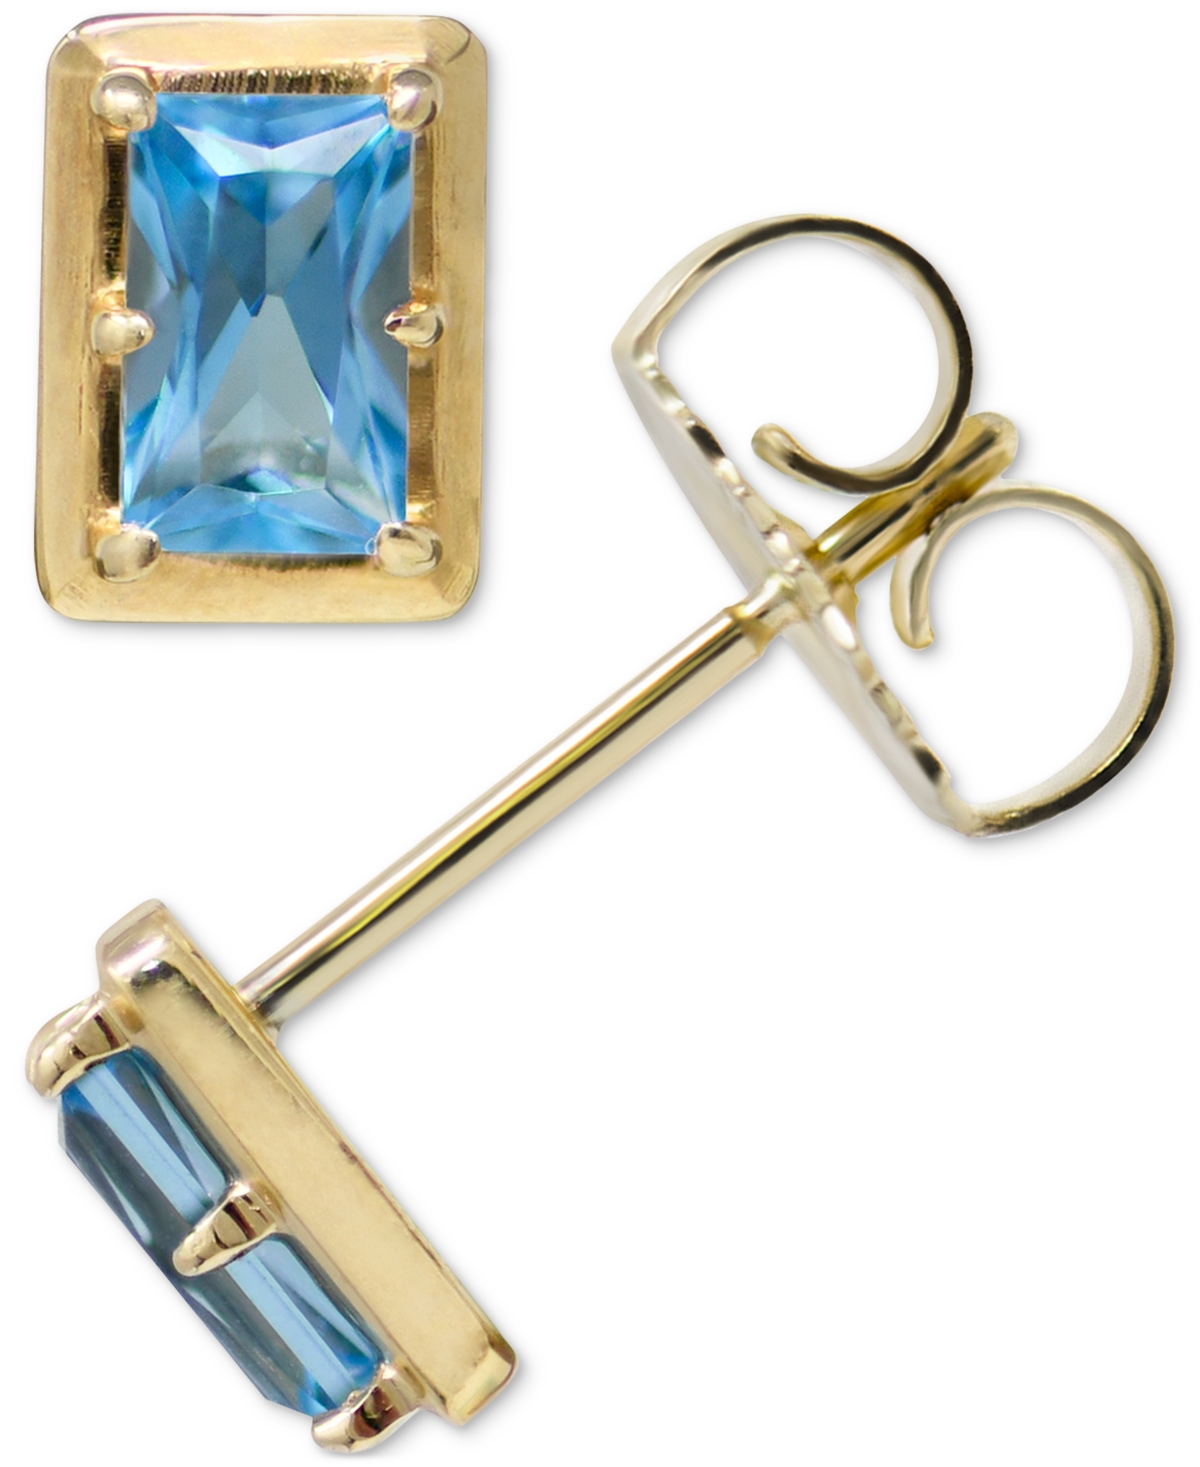 Anzie Blue Topaz Stud Earrings in 14k Gold (Also in White Topaz)